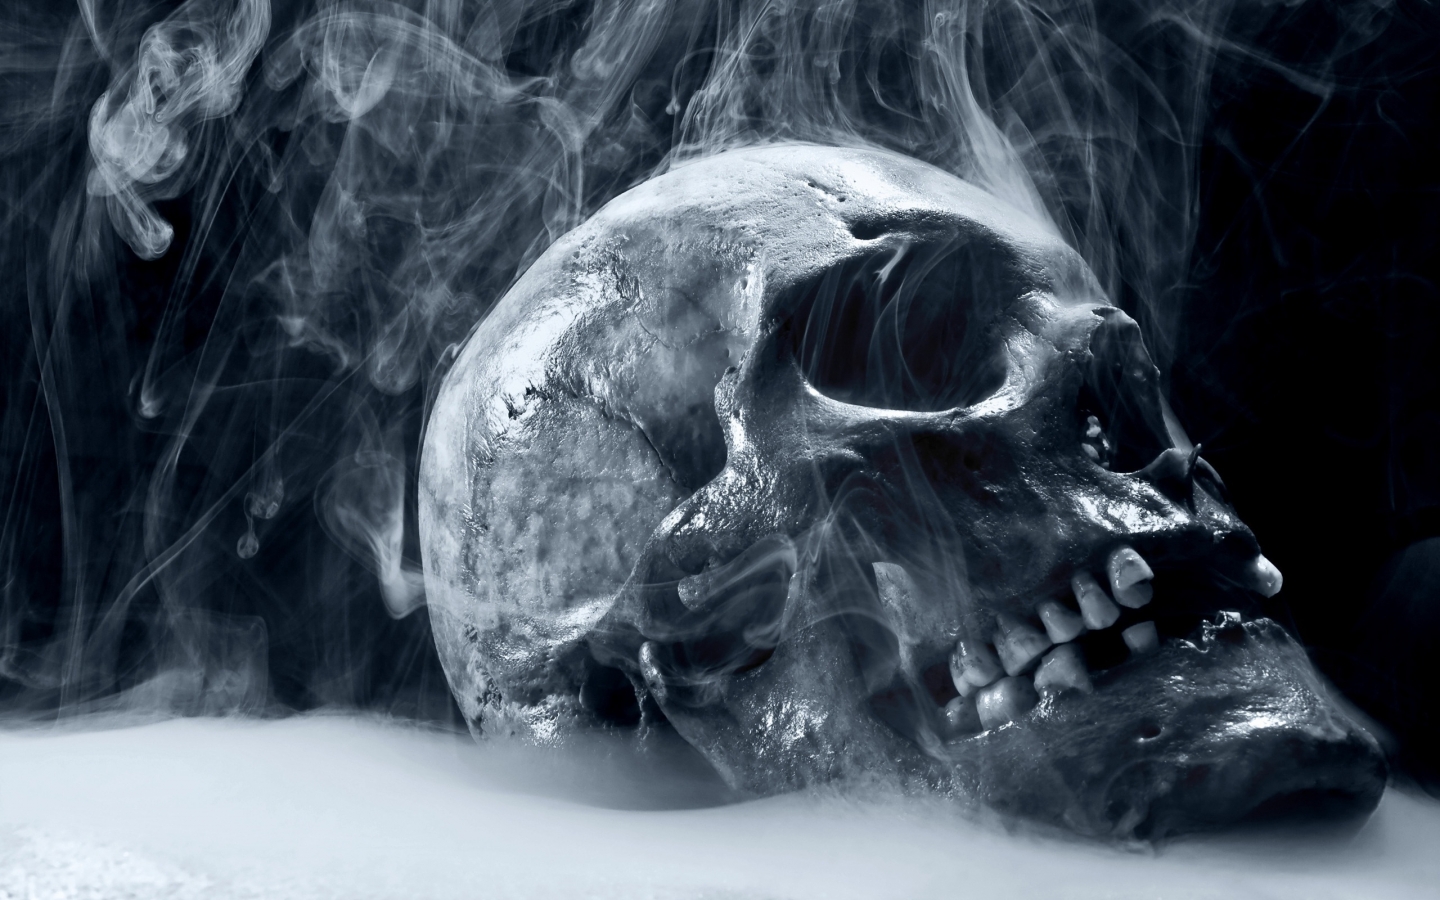 Skull Smoking for 1440 x 900 widescreen resolution